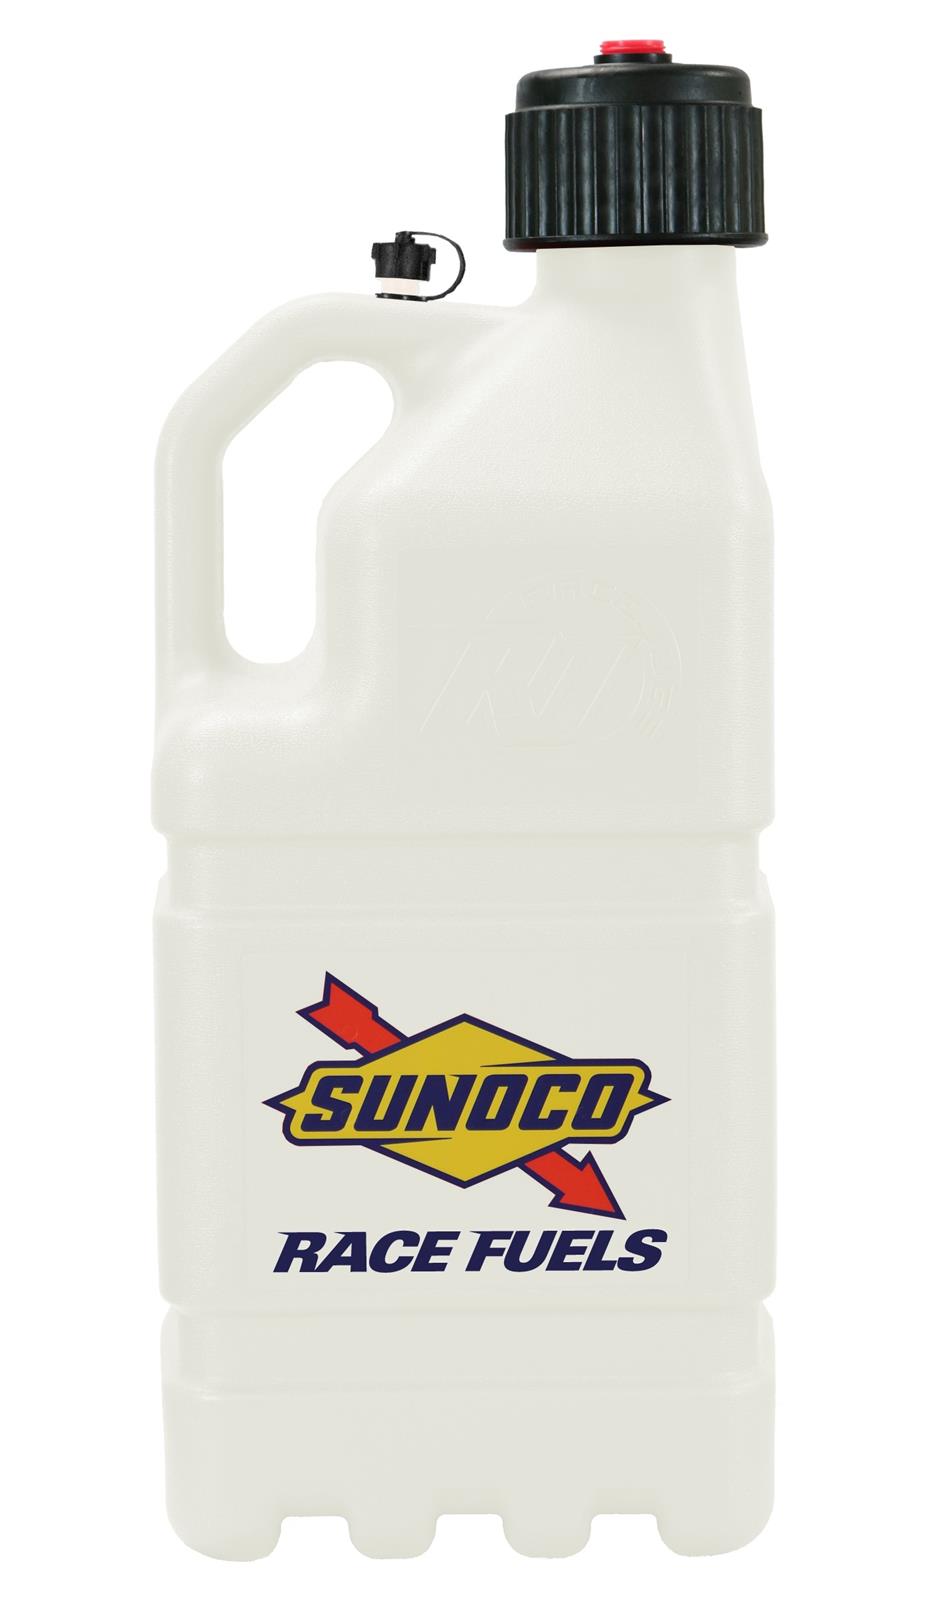 Sunoco R7500CL Sunoco Generation 2 Race Jugs | Summit Racing